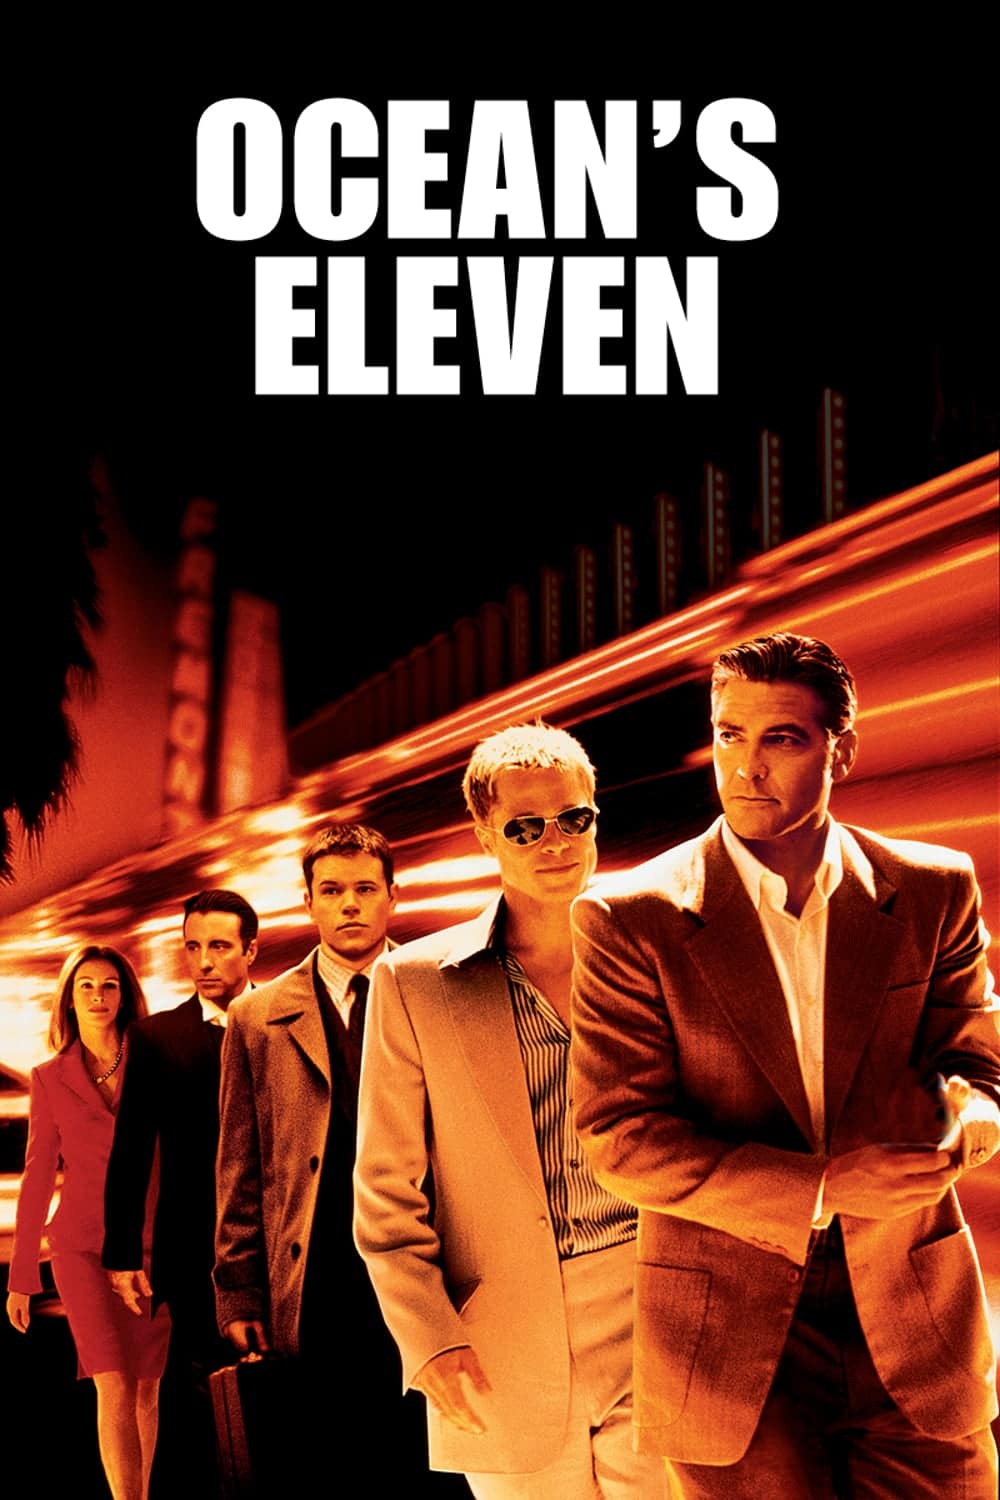 Plakat von "Ocean's Eleven"